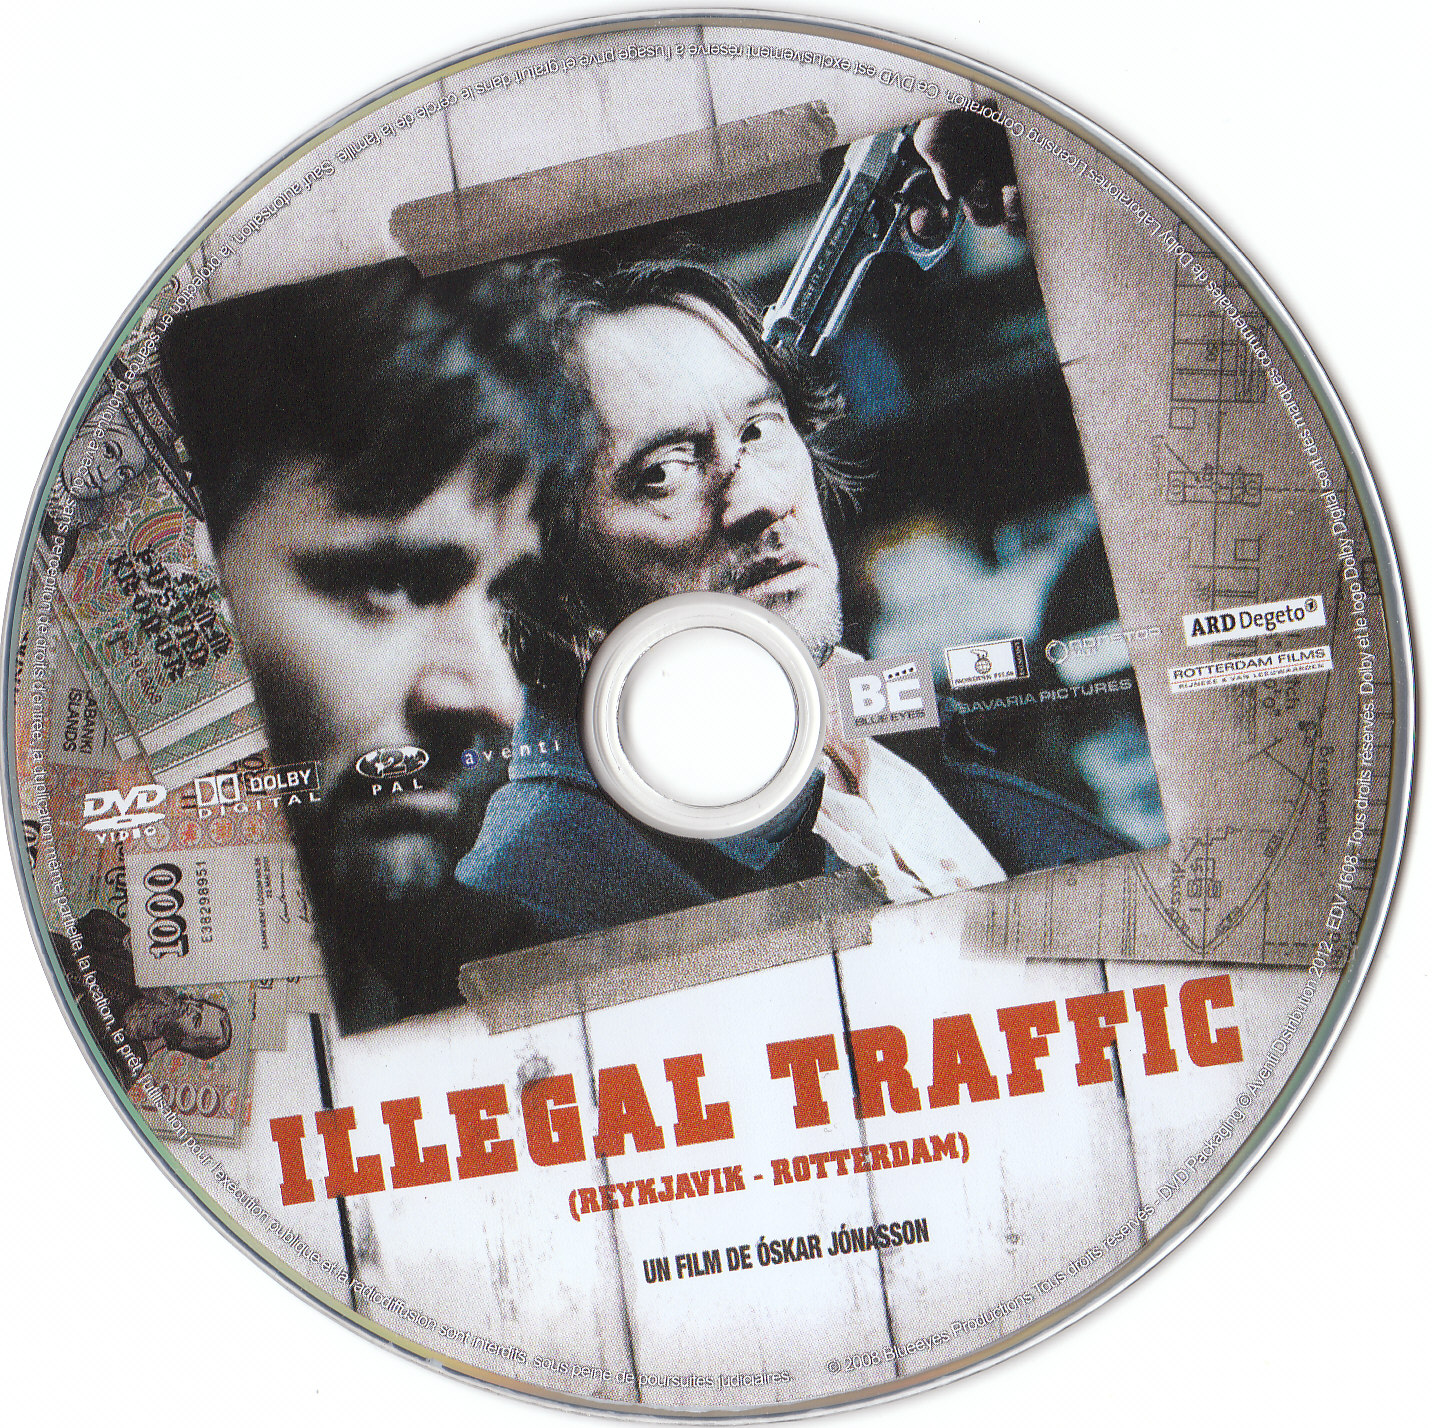 Illegal traffic